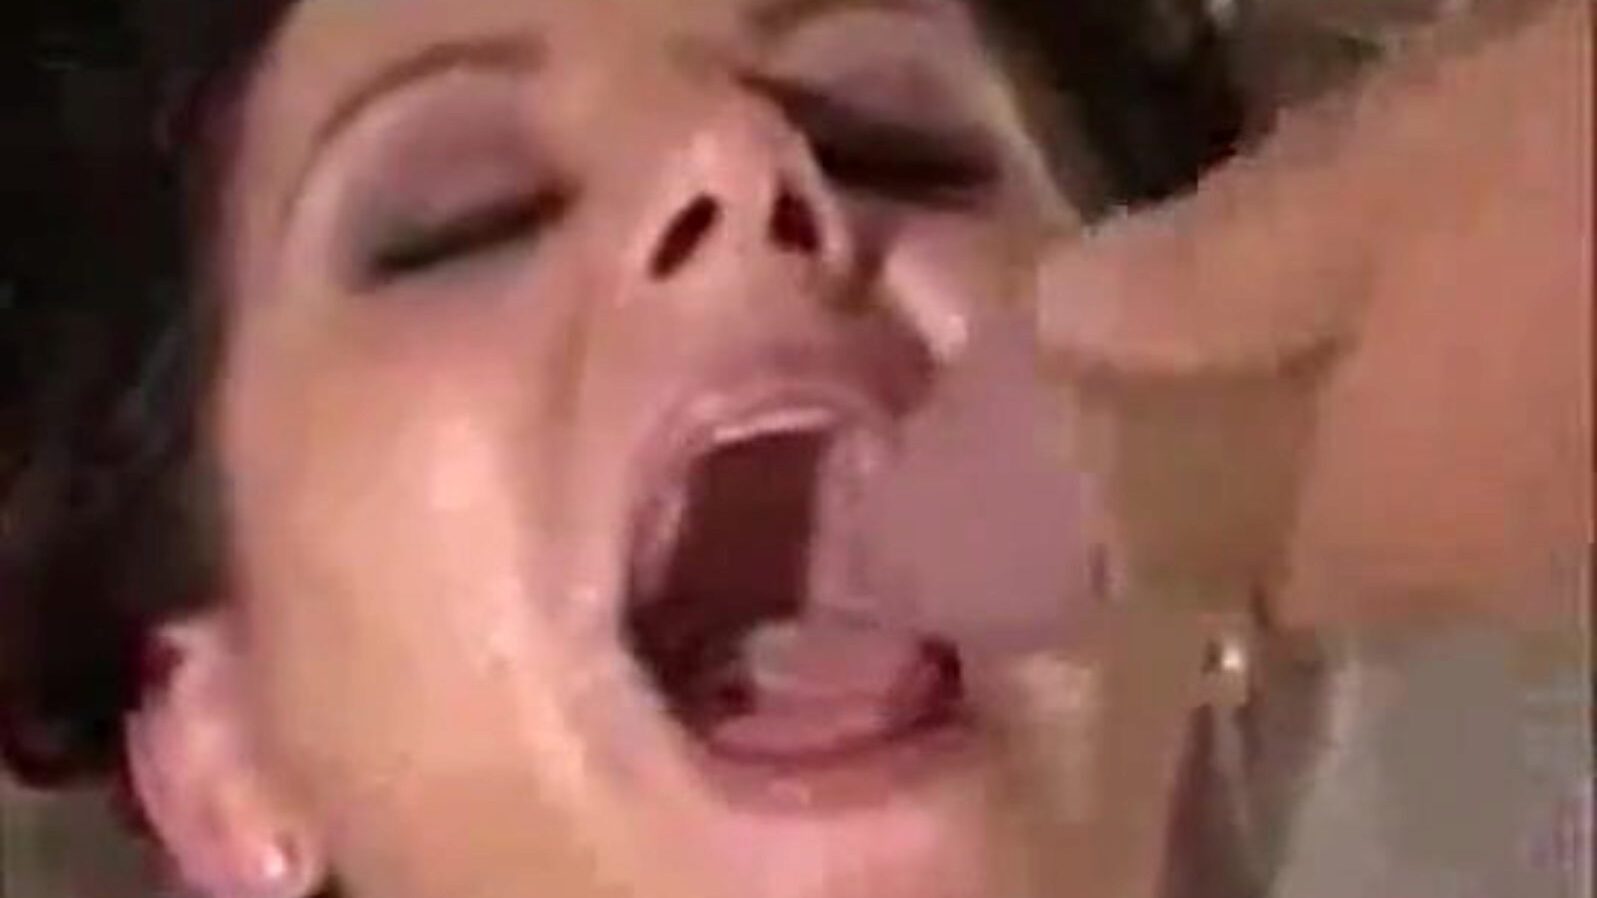 mass ejaculation jism wench look slikeaglaced donut salope